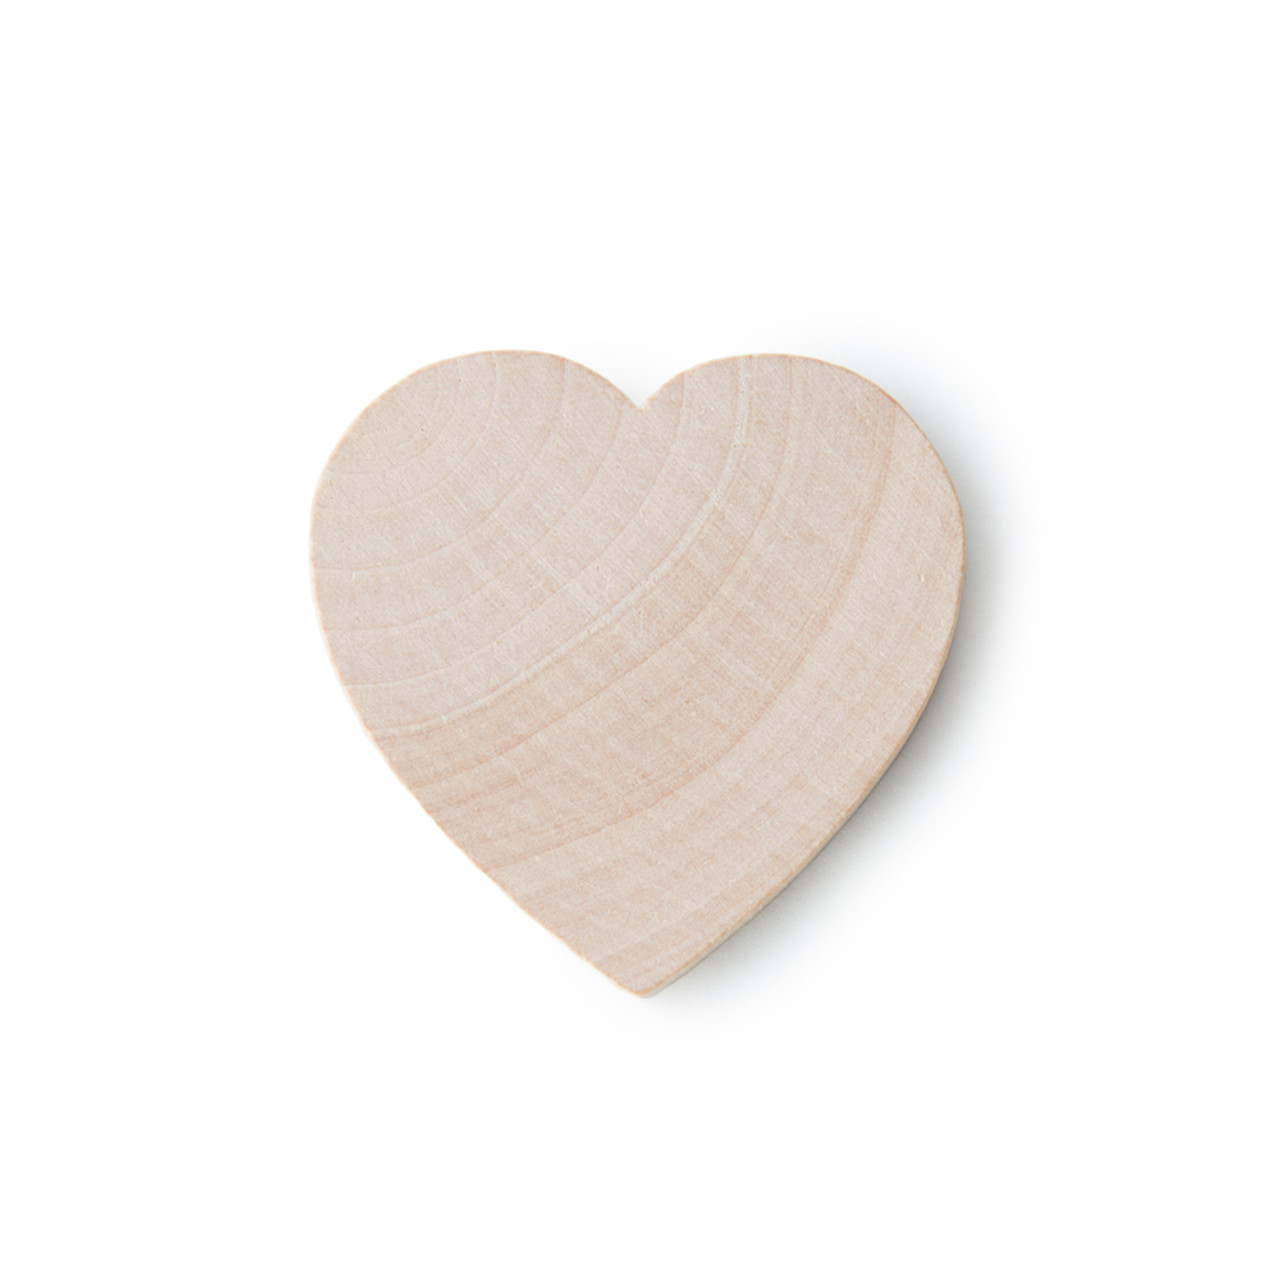 2 Wood Heart